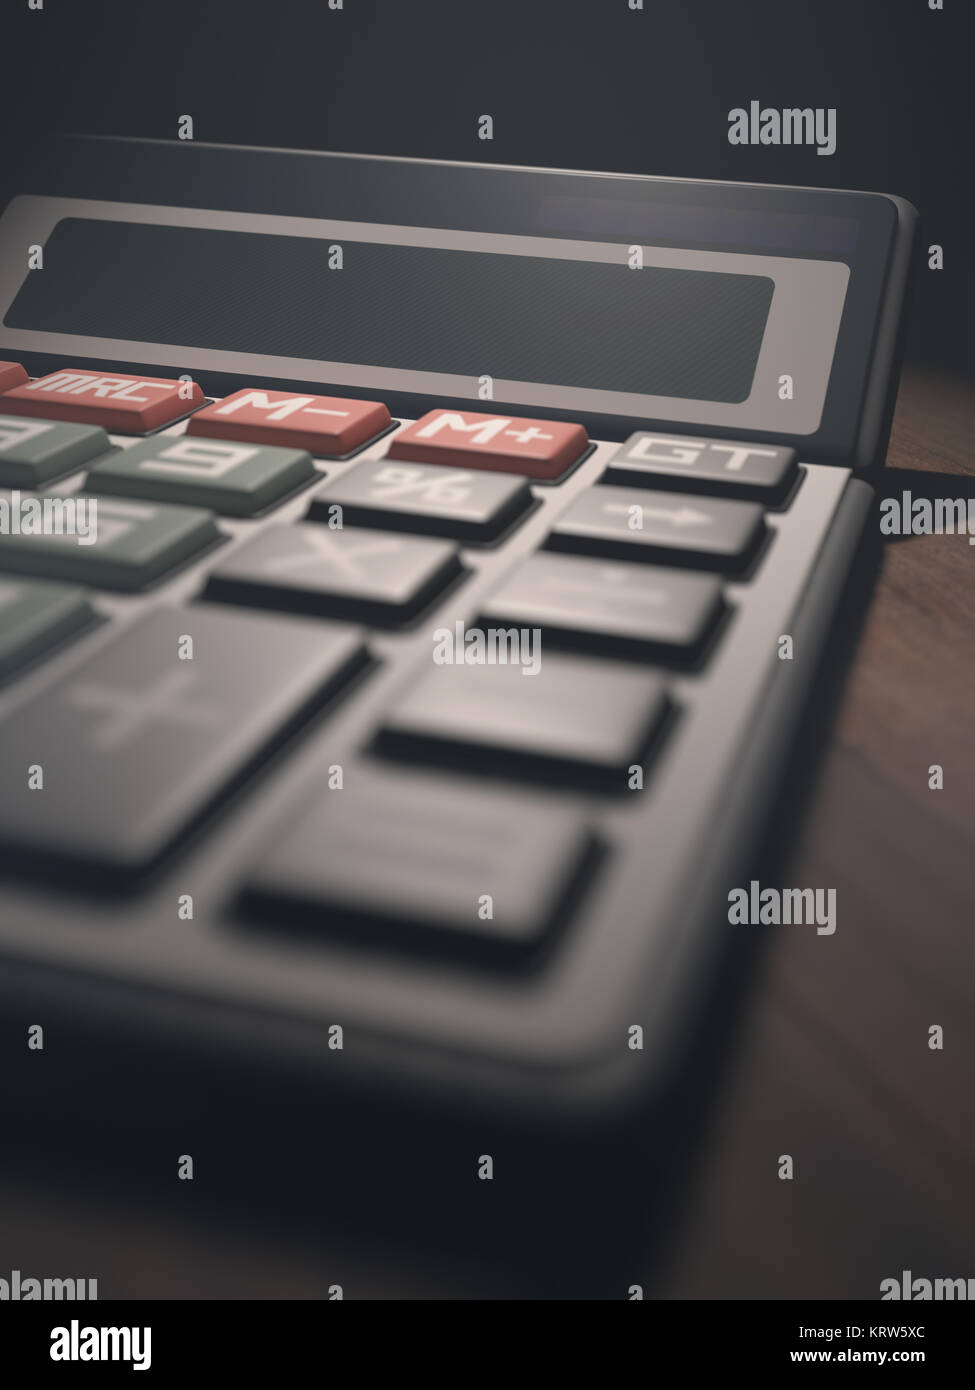 Calculator Display Blank Stock Photo